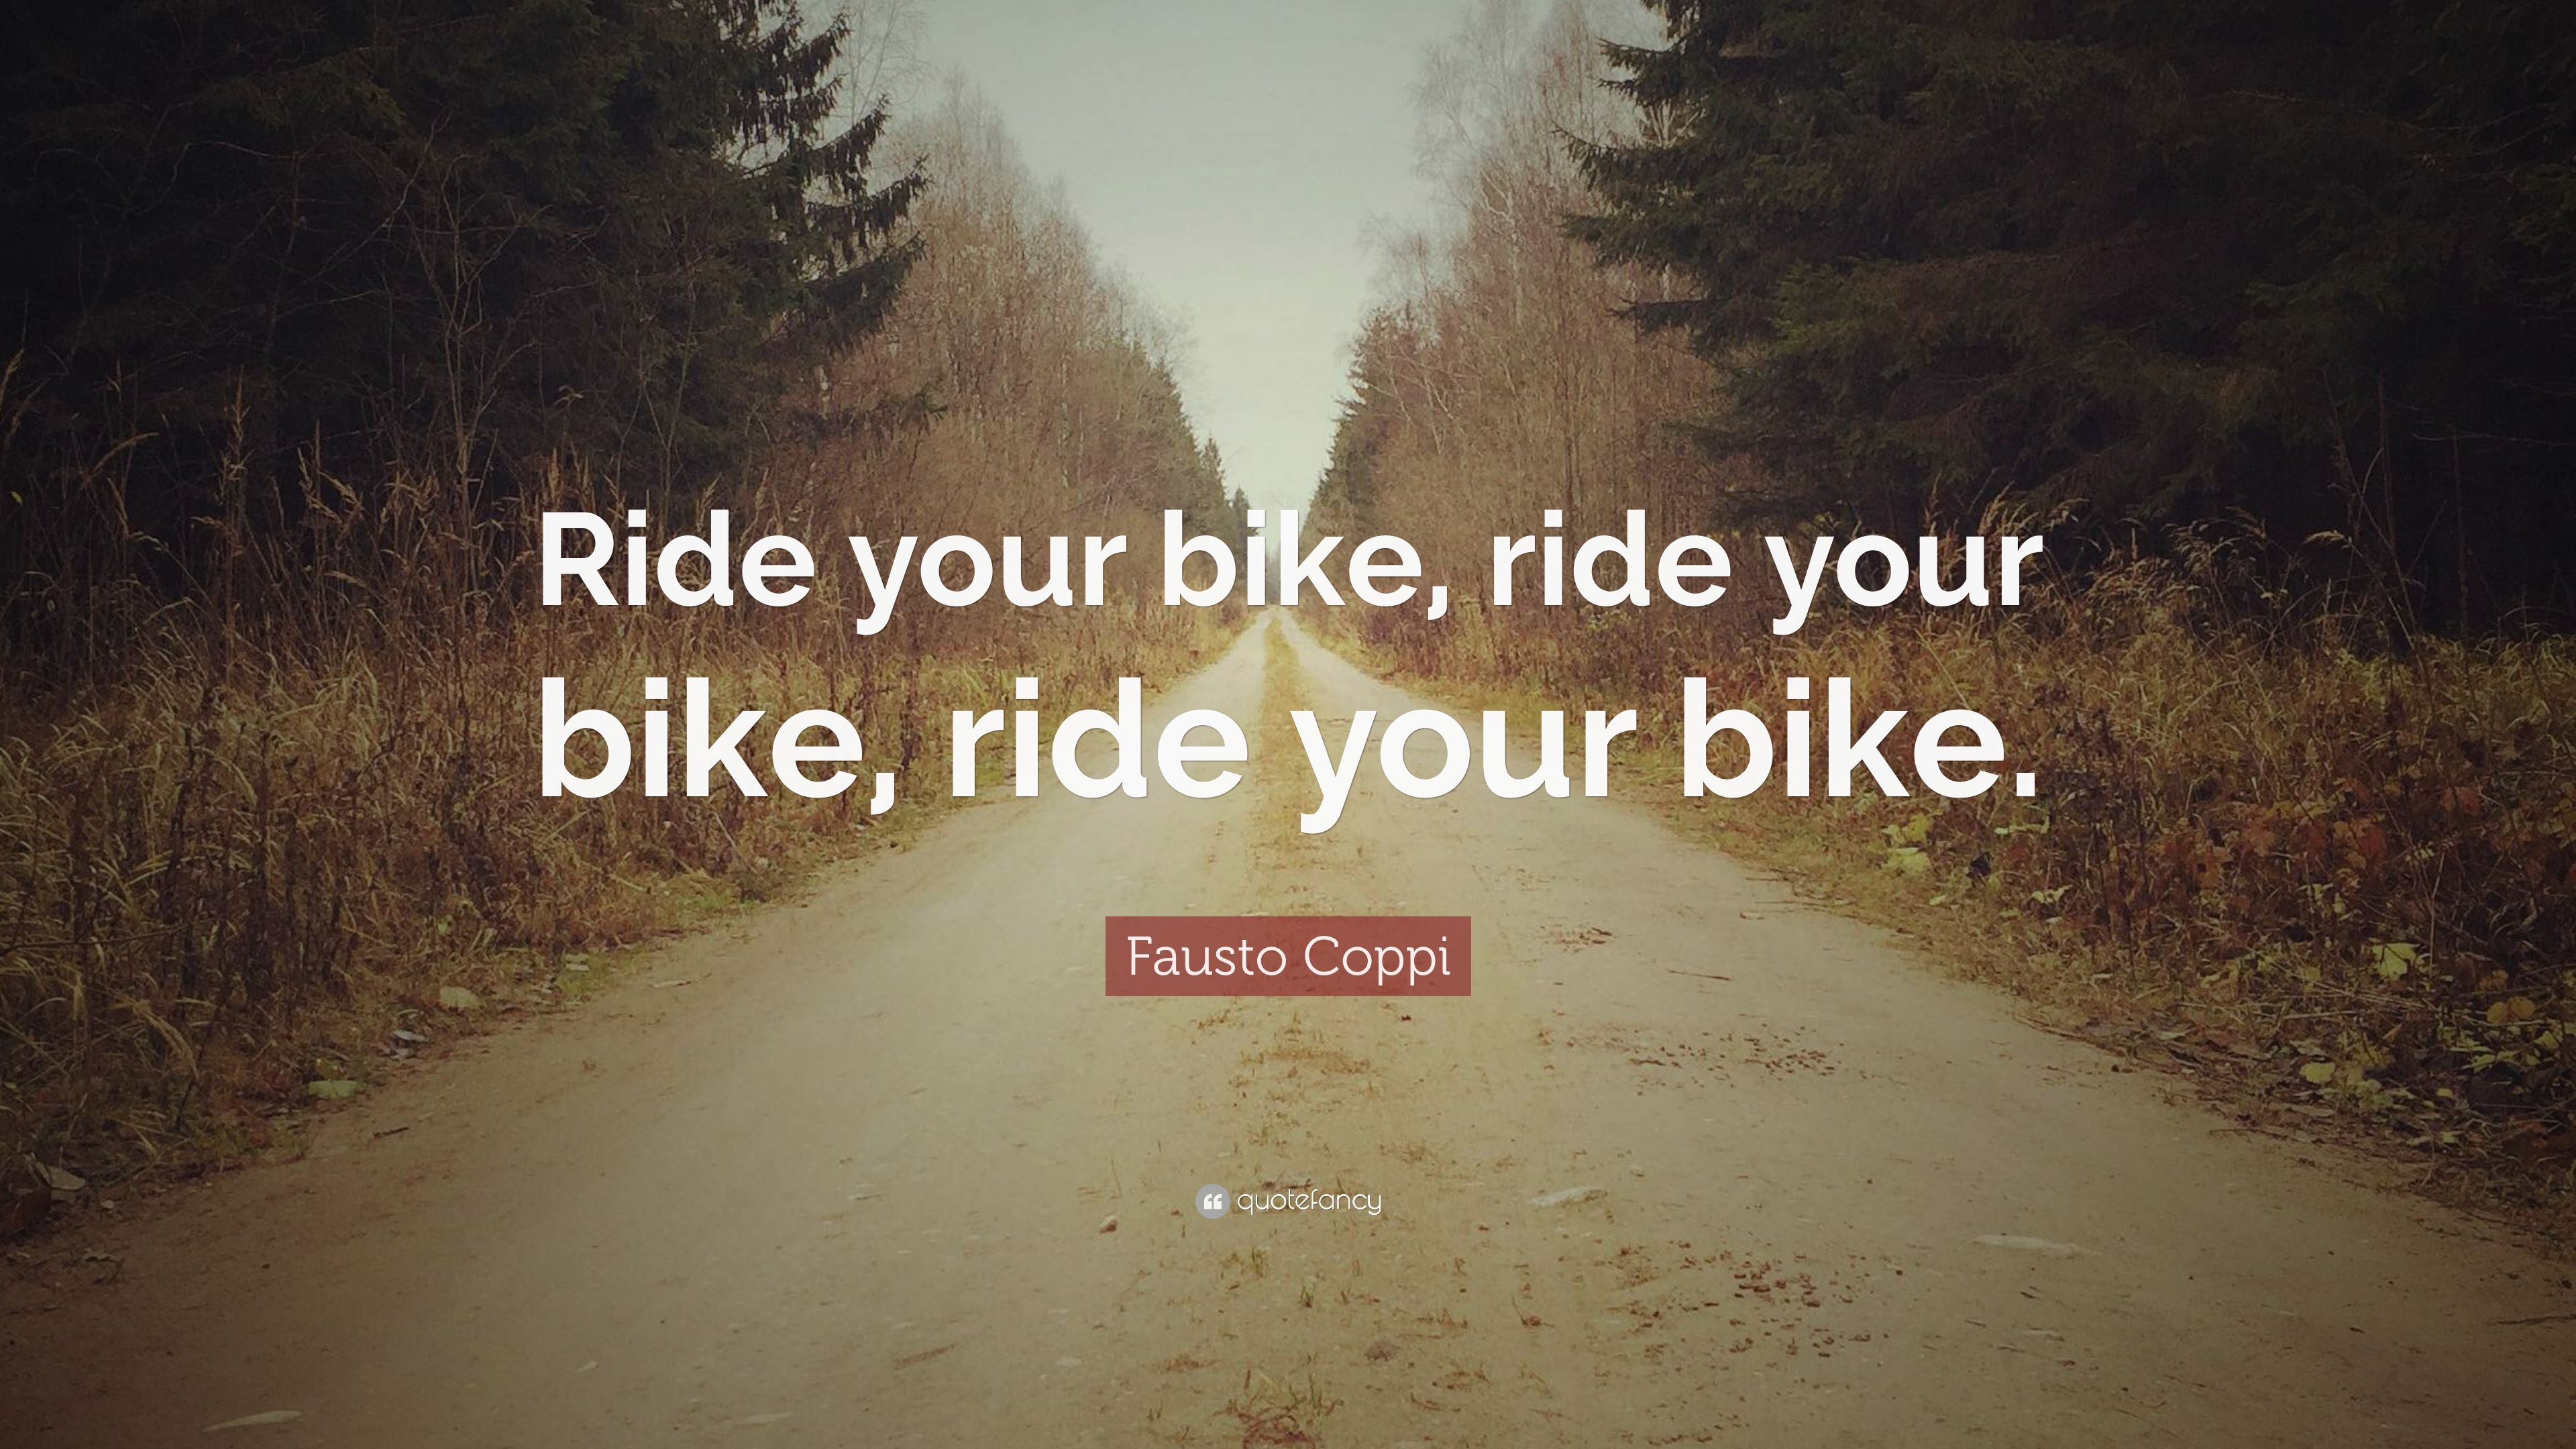 Fausto Coppi Quote: “Ride your bike, ride your bike, ride your bike.” (10 wallpaper)